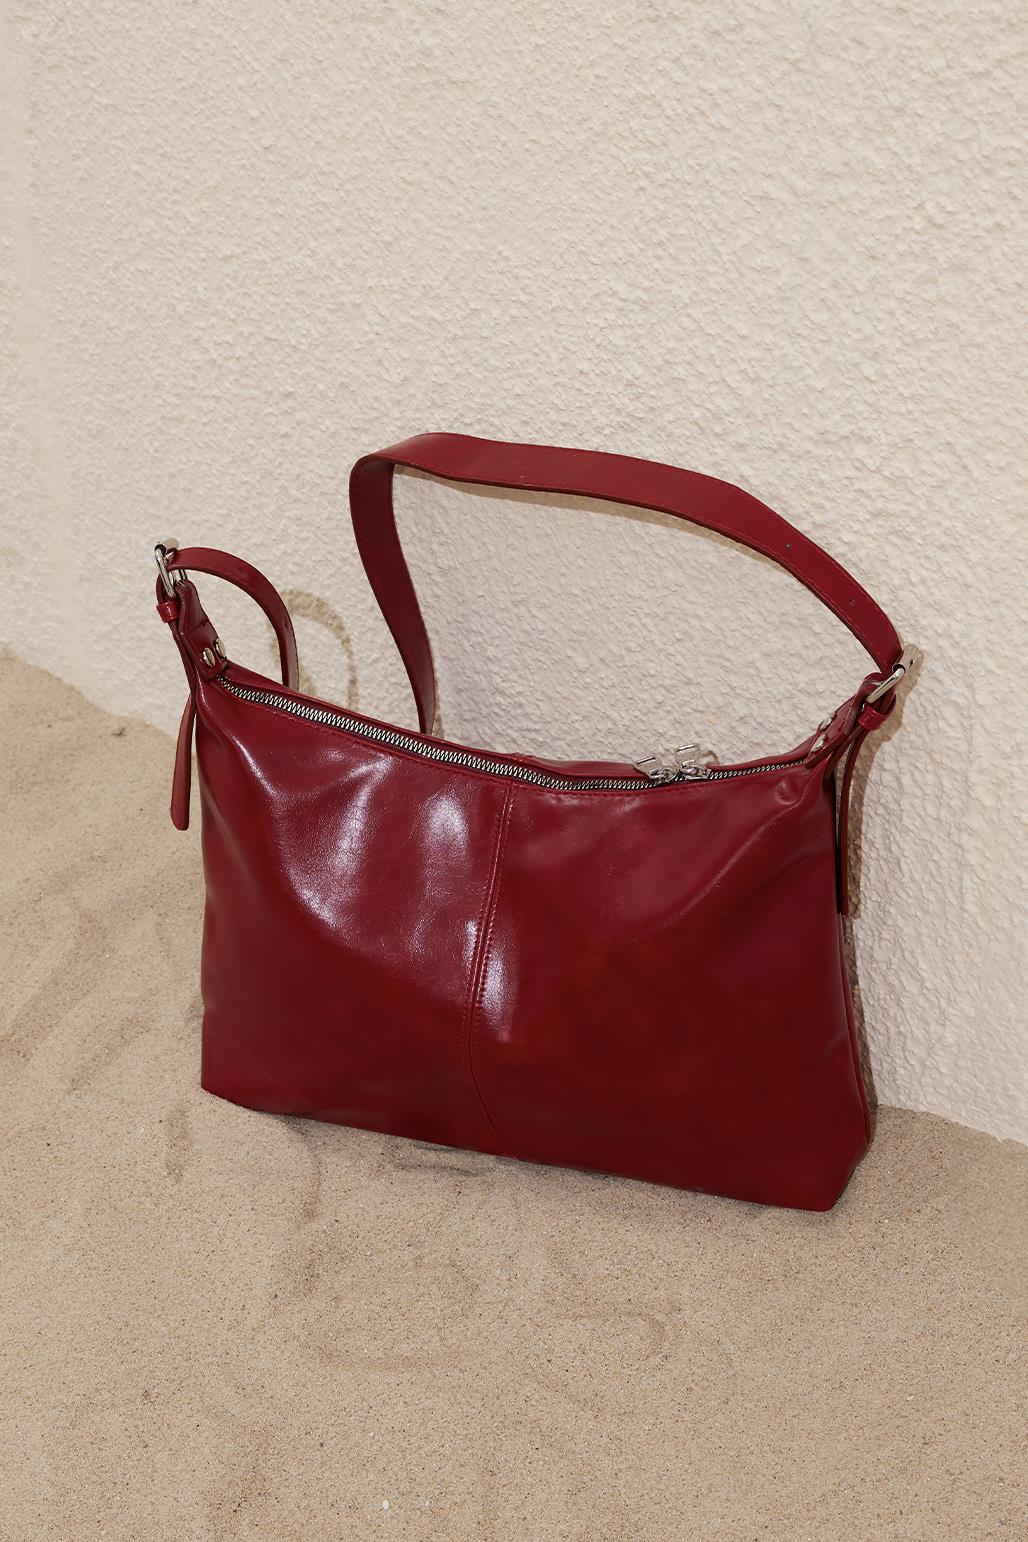 Olivia Leather Crossbody Bag Cherry